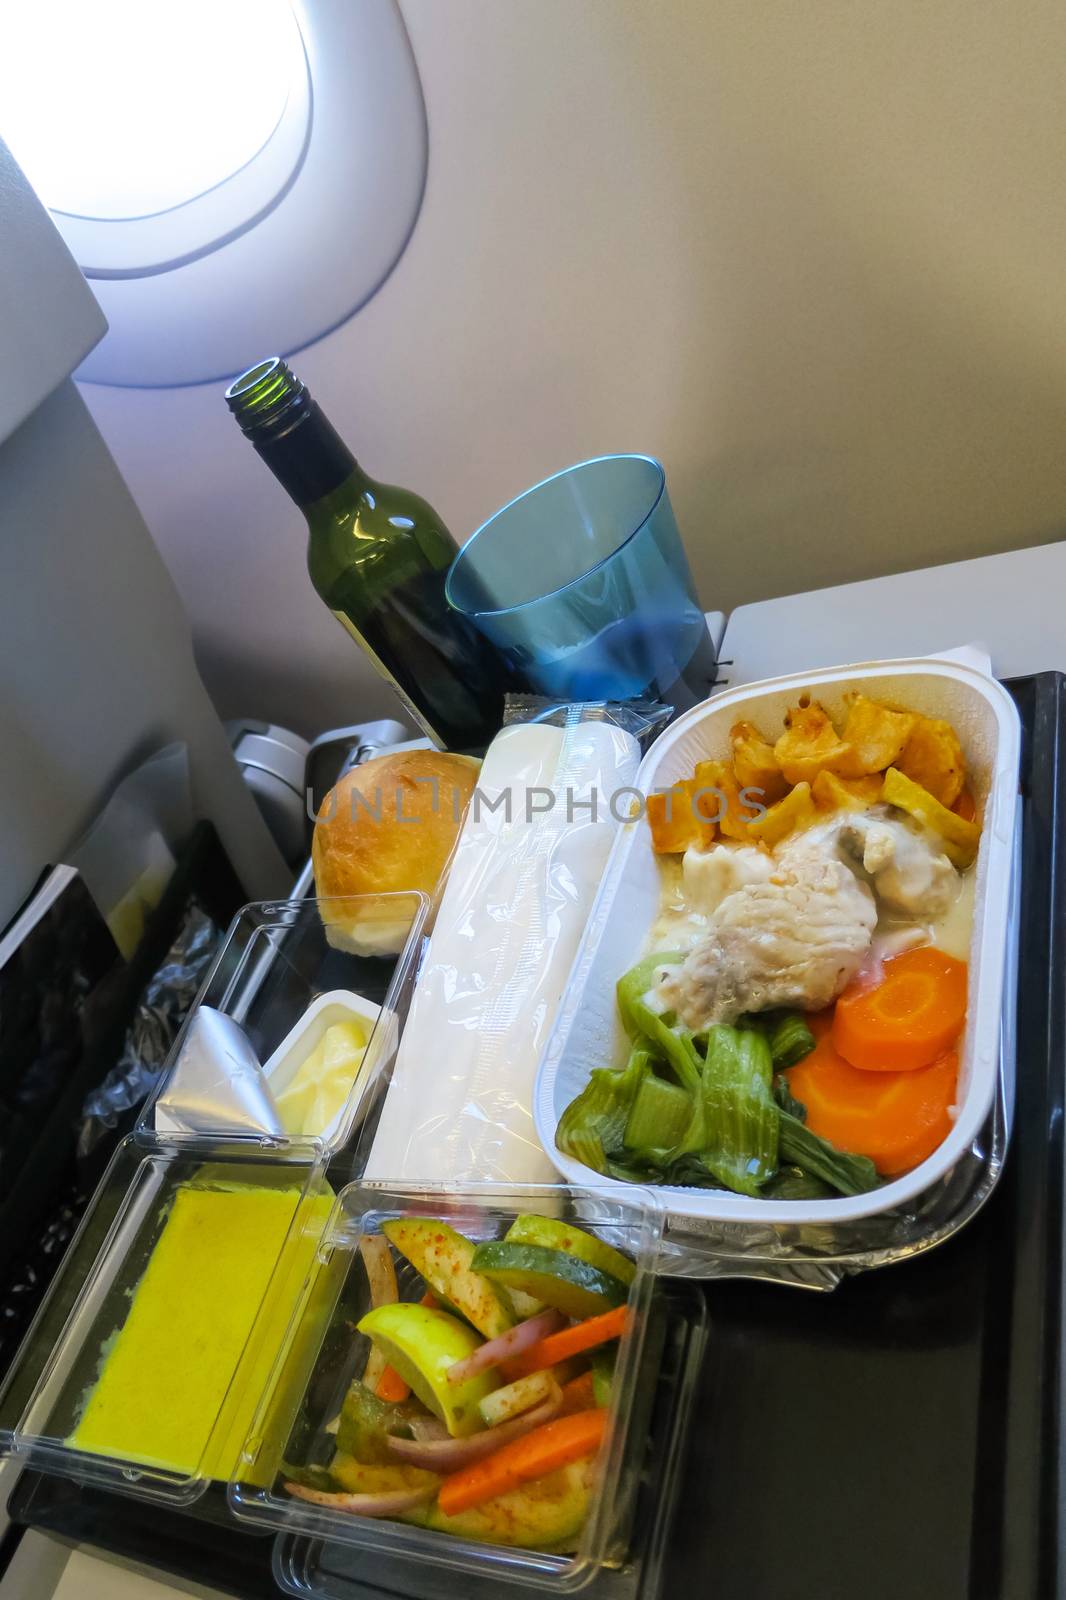 Lunch in a plane by dutourdumonde